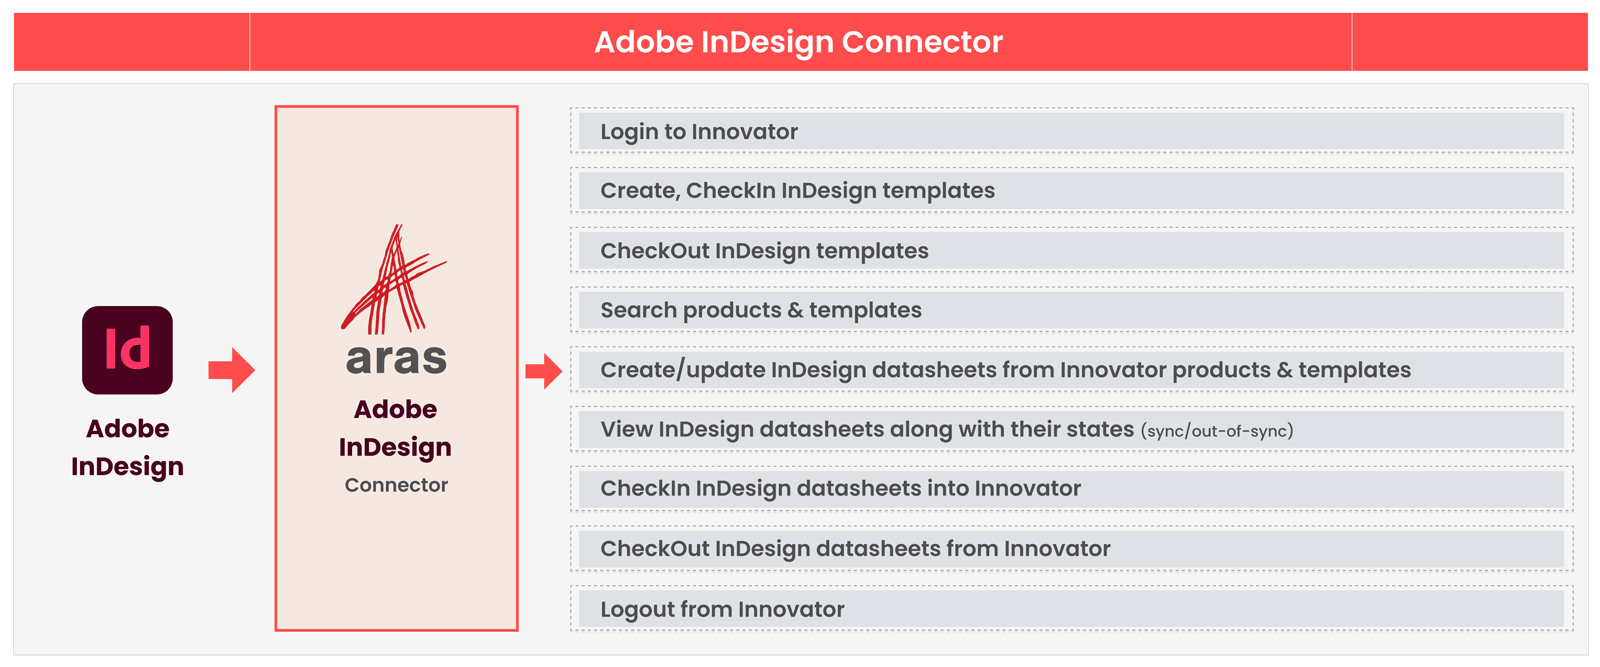 Adobe IinDesign Connector Diagram